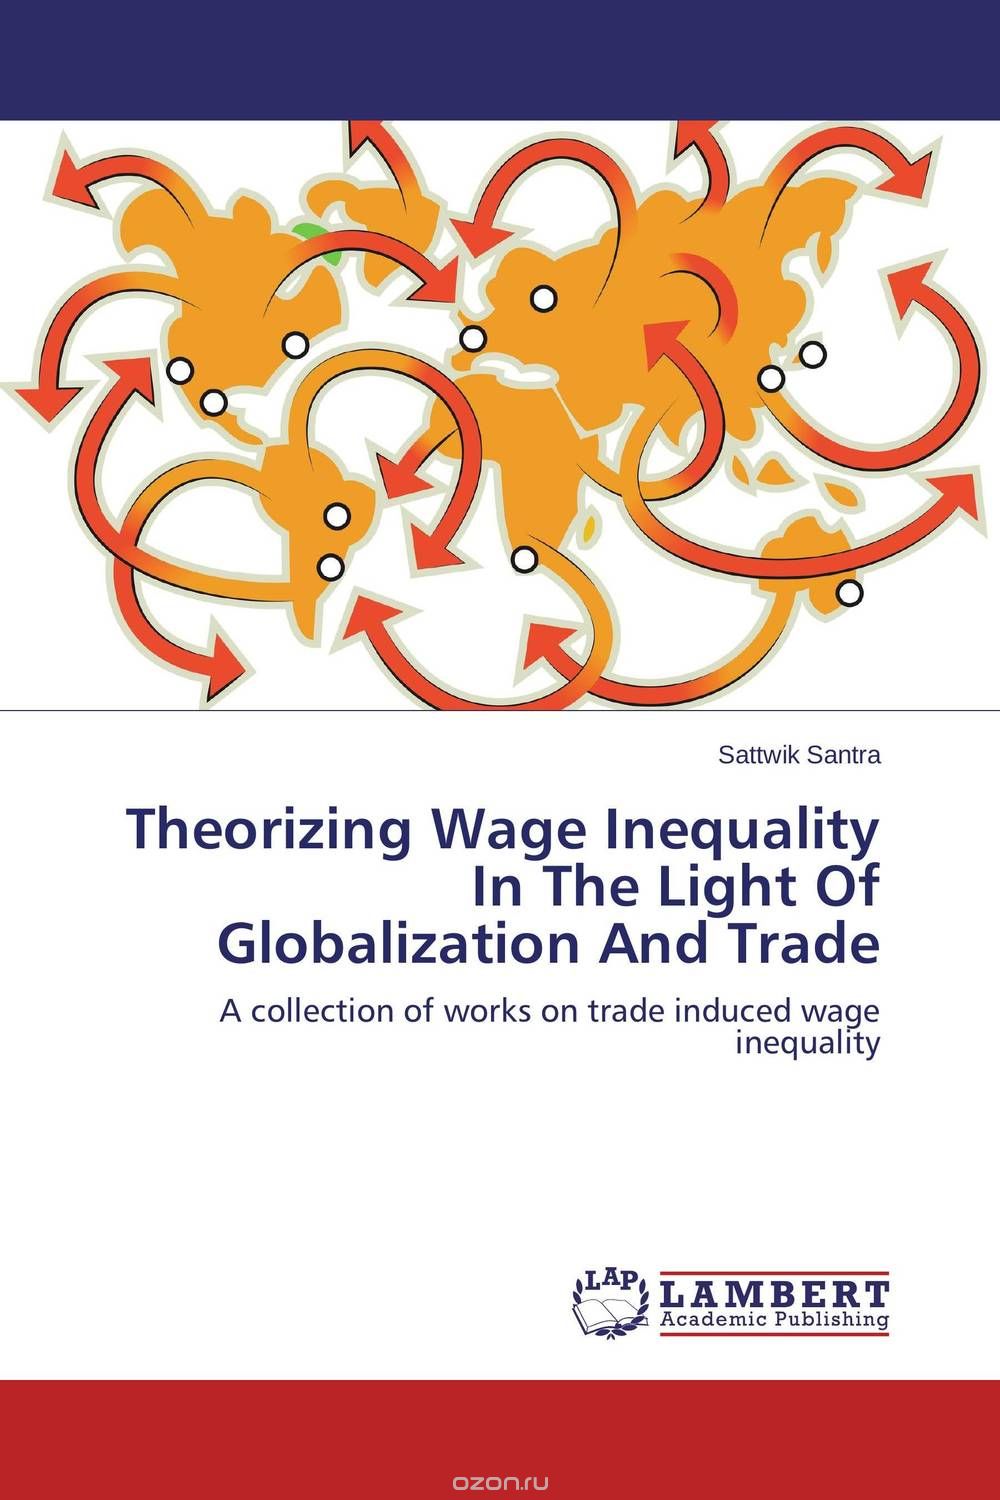 Скачать книгу "Theorizing Wage Inequality In The Light Of Globalization And Trade"